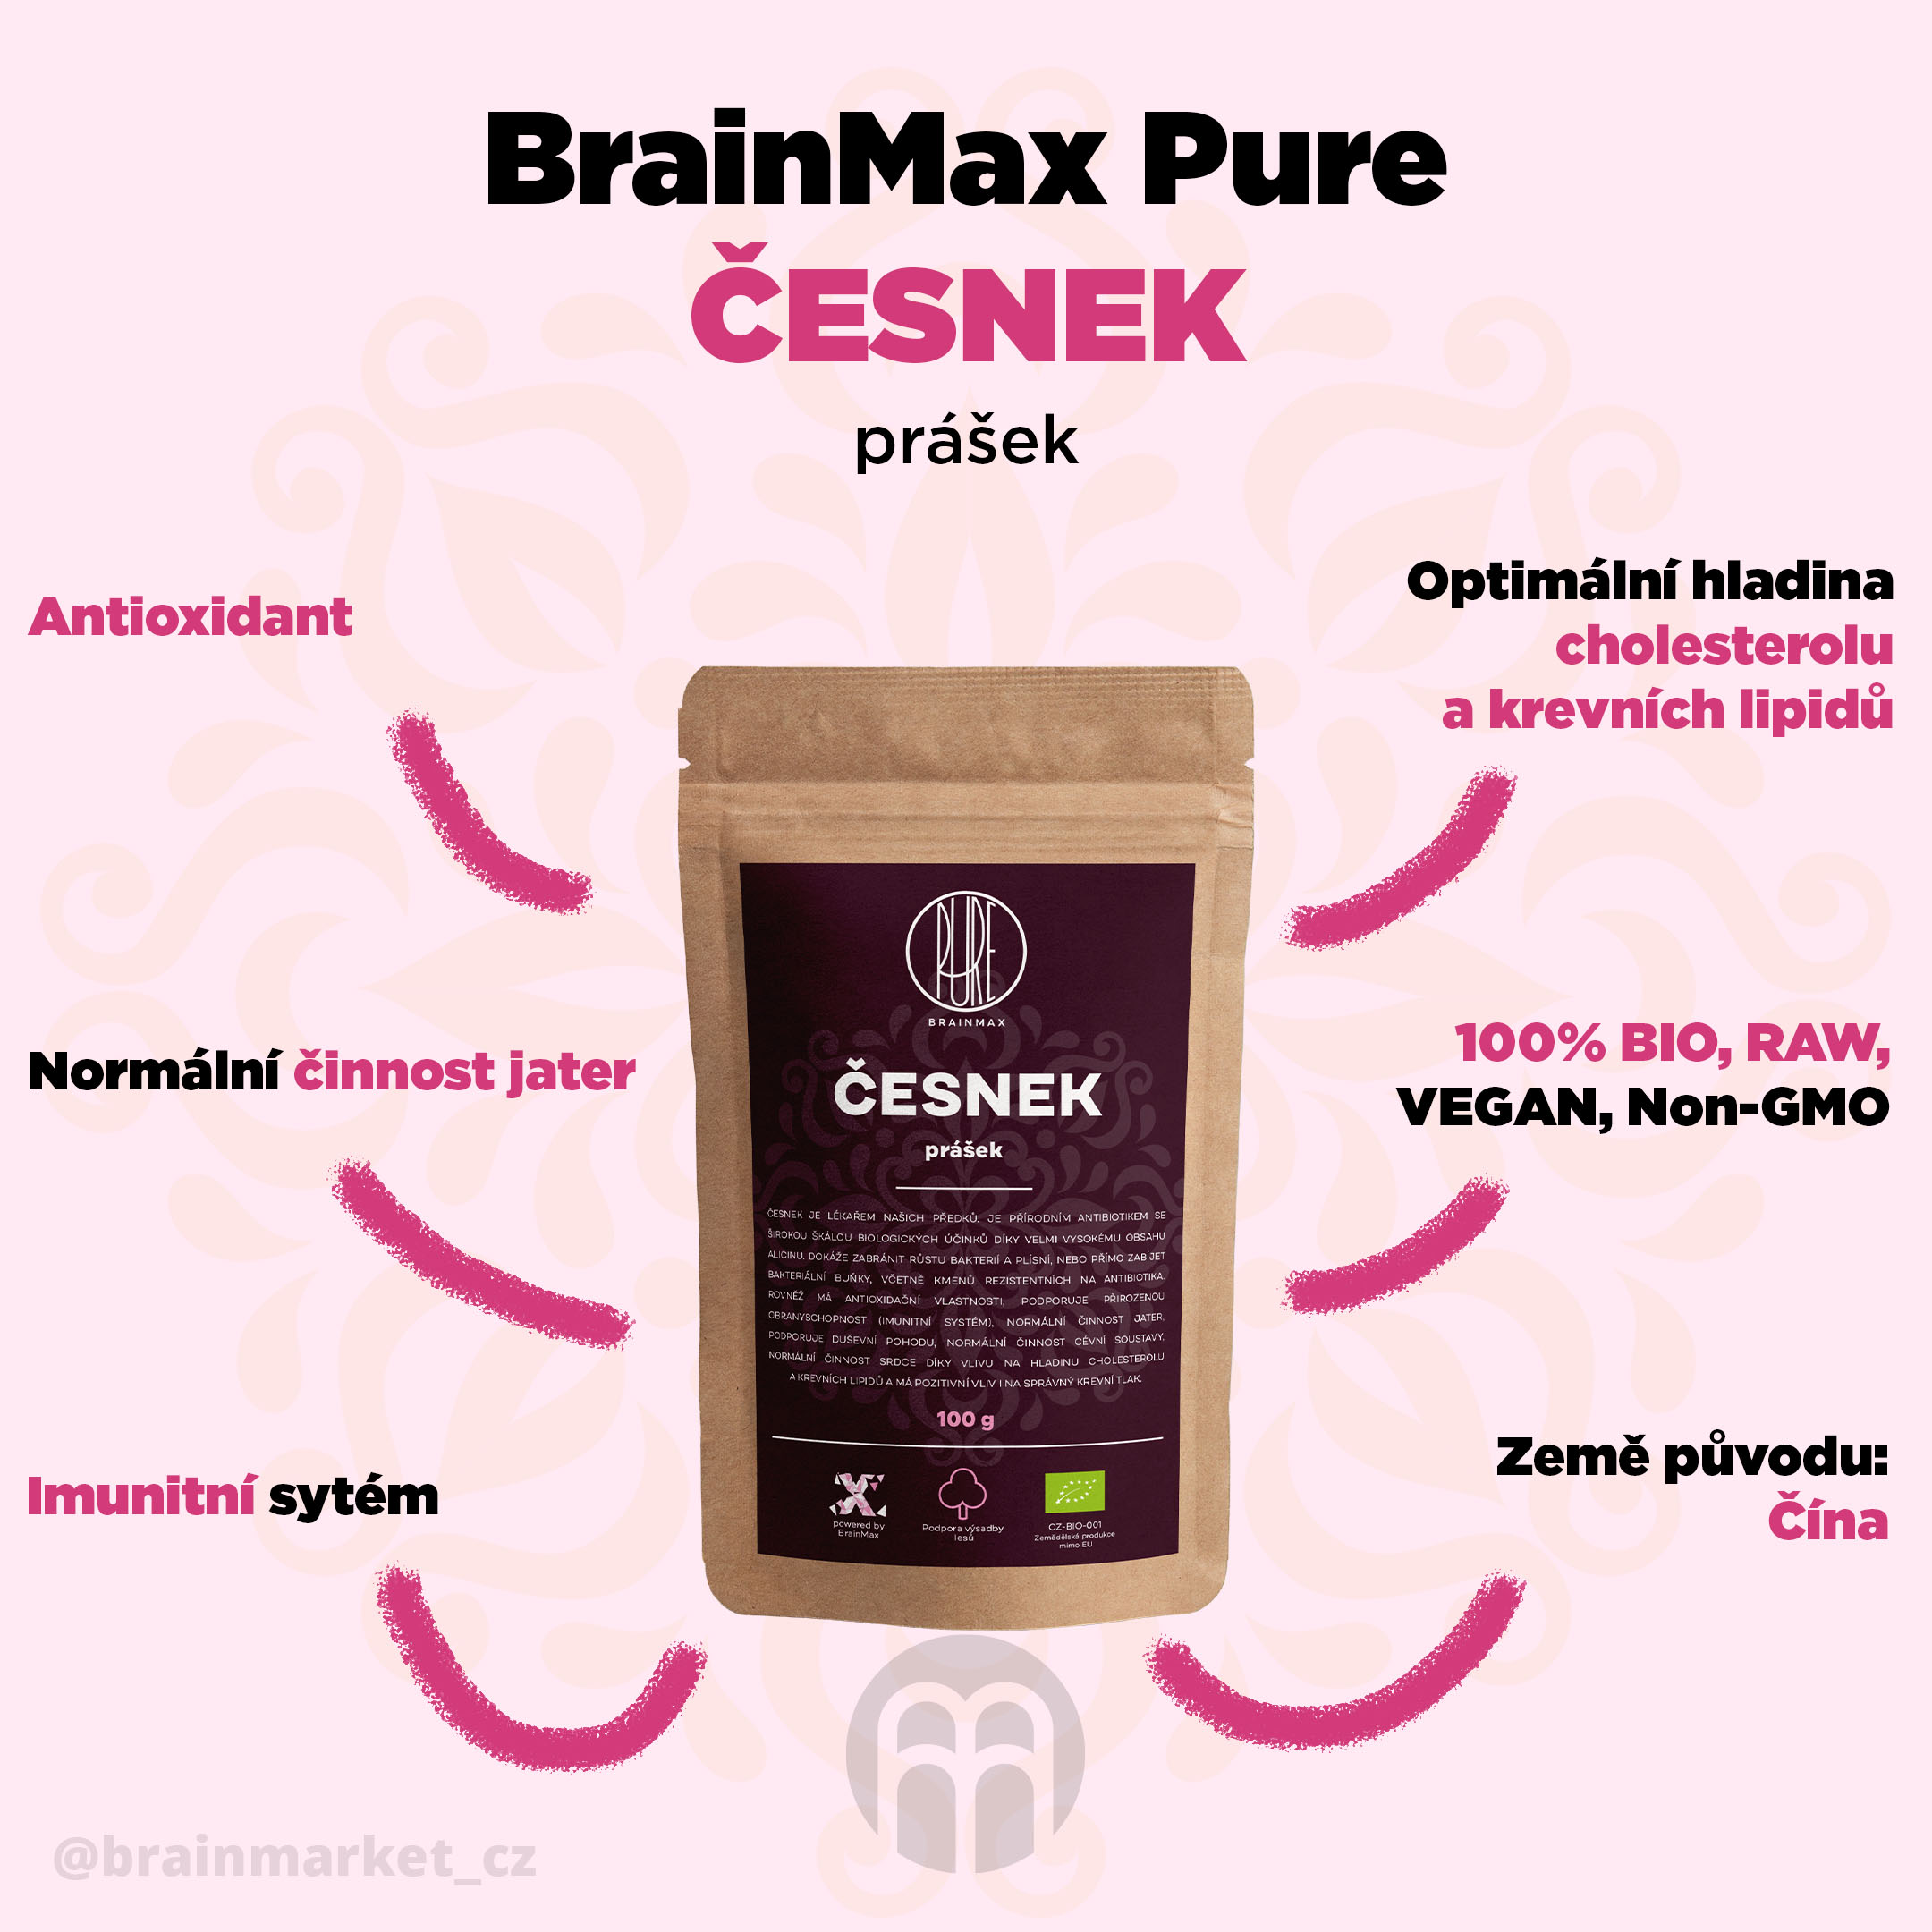 BrainMax Pure Česnek, prášek - BrainMarket.cz